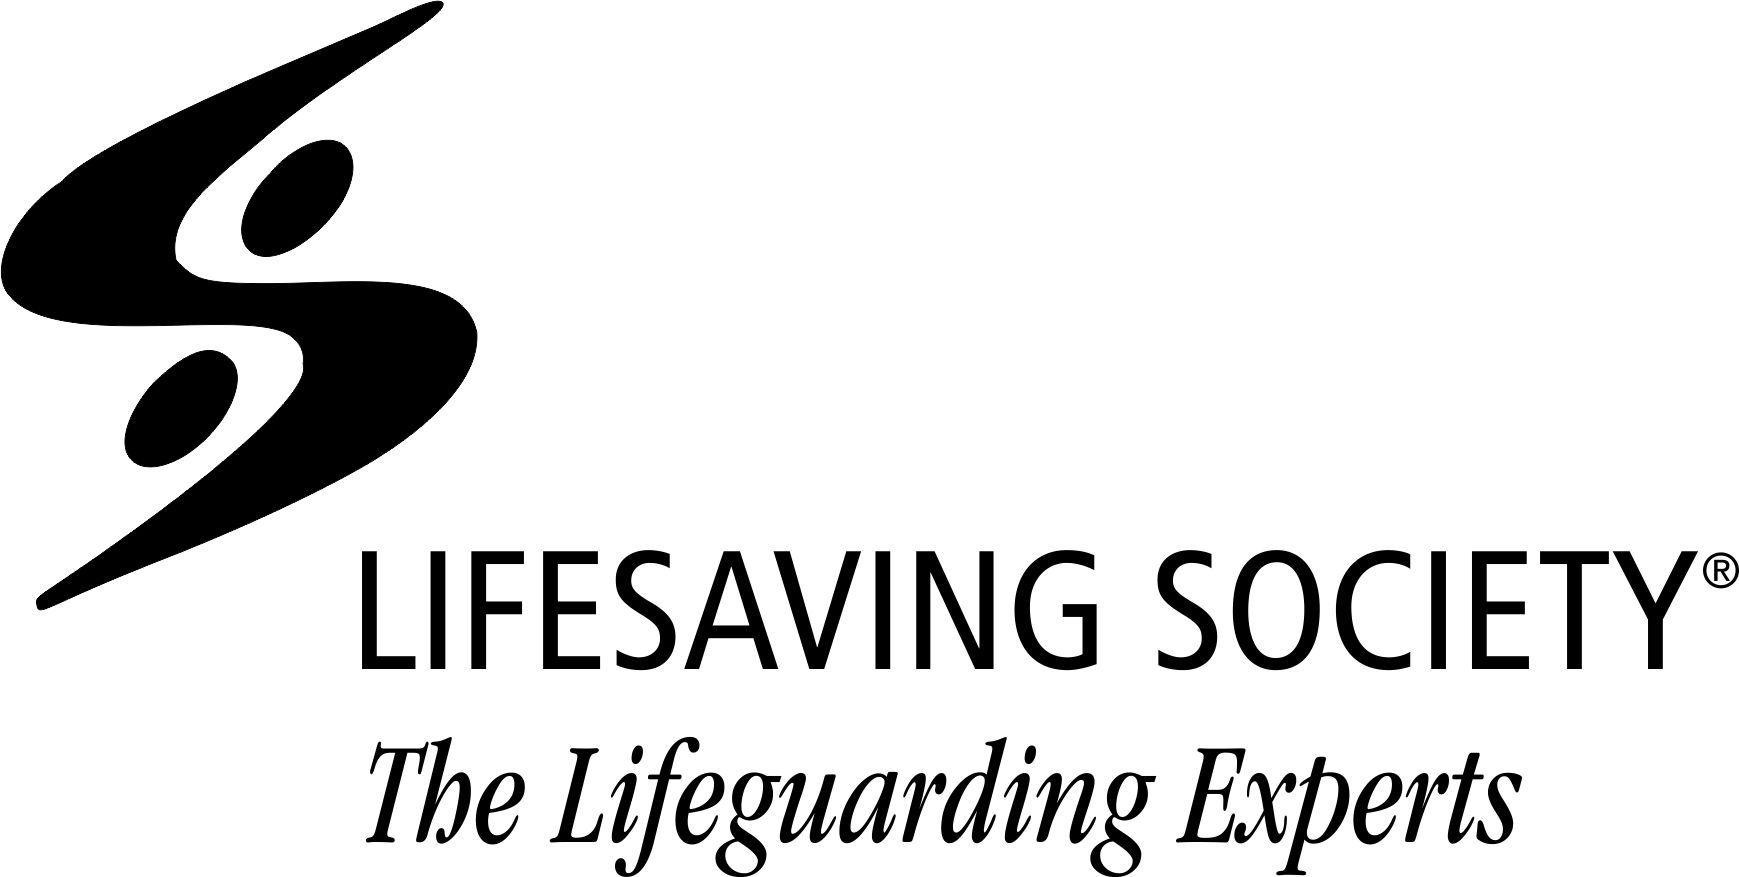 Society Logo - Lifesaving Society | Logos